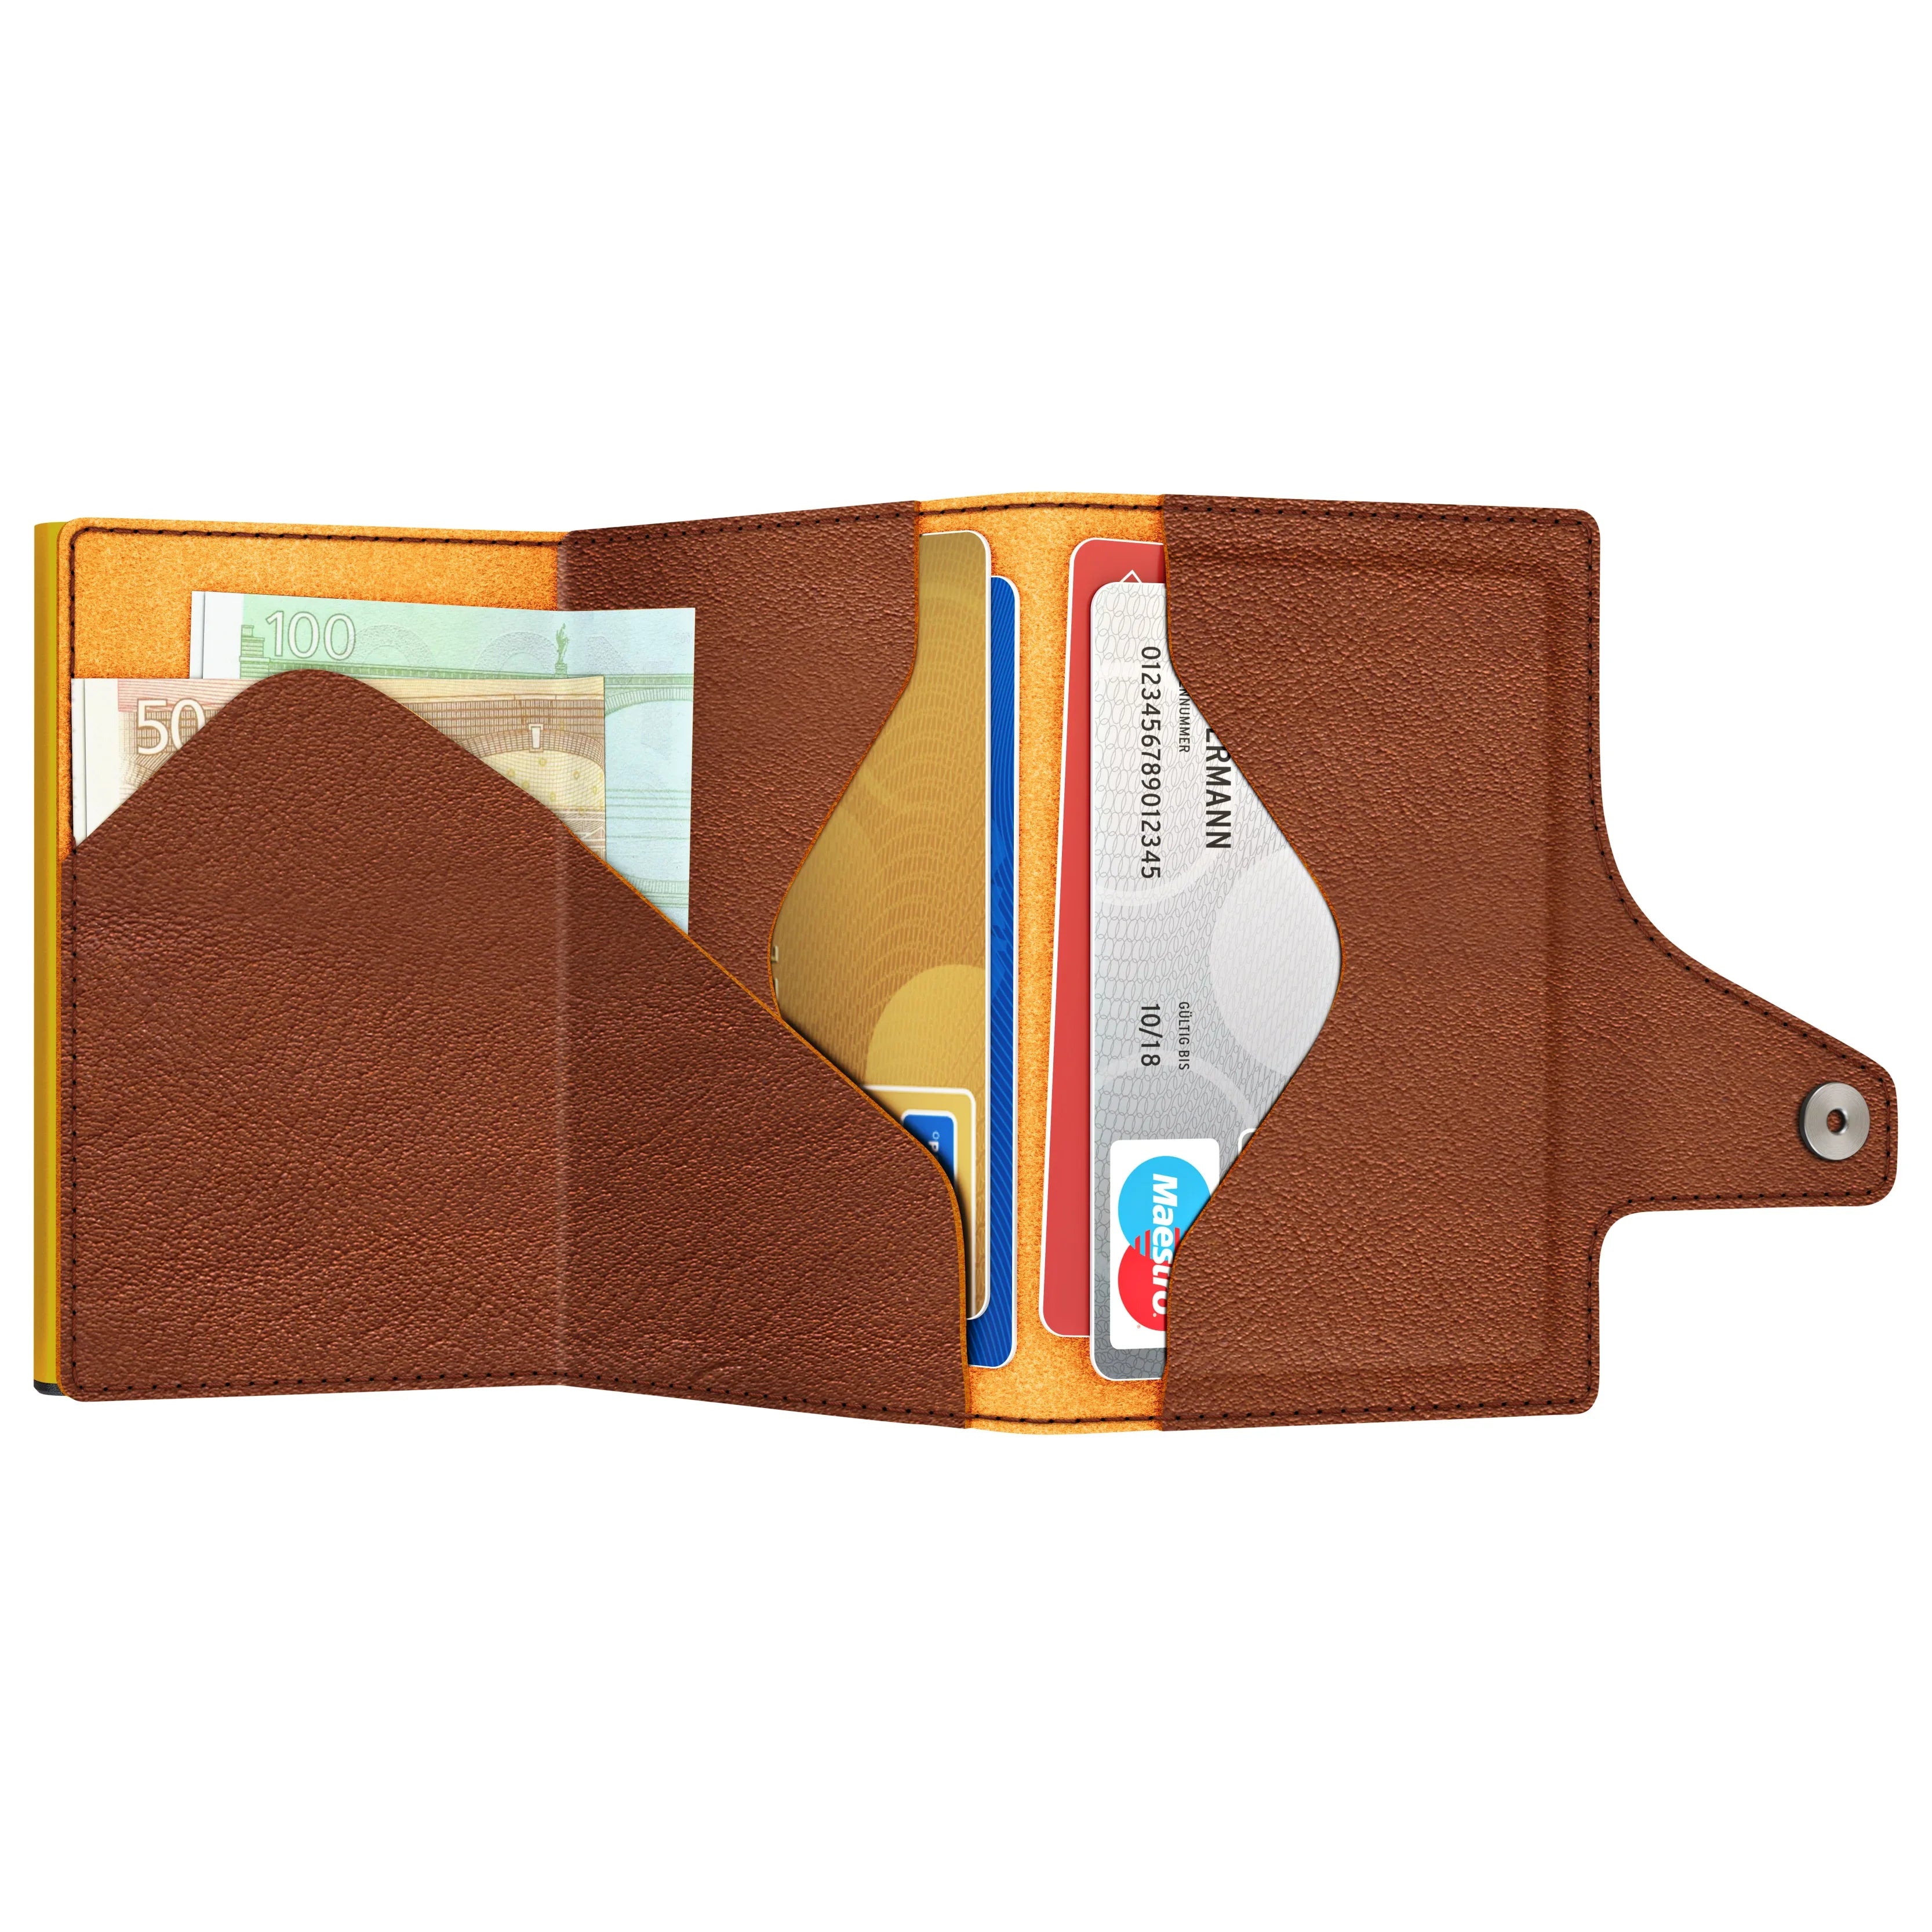 Tru Virtu Special Edition Click & Slide Caramba wallet 10 cm - Black-Yell/Gold